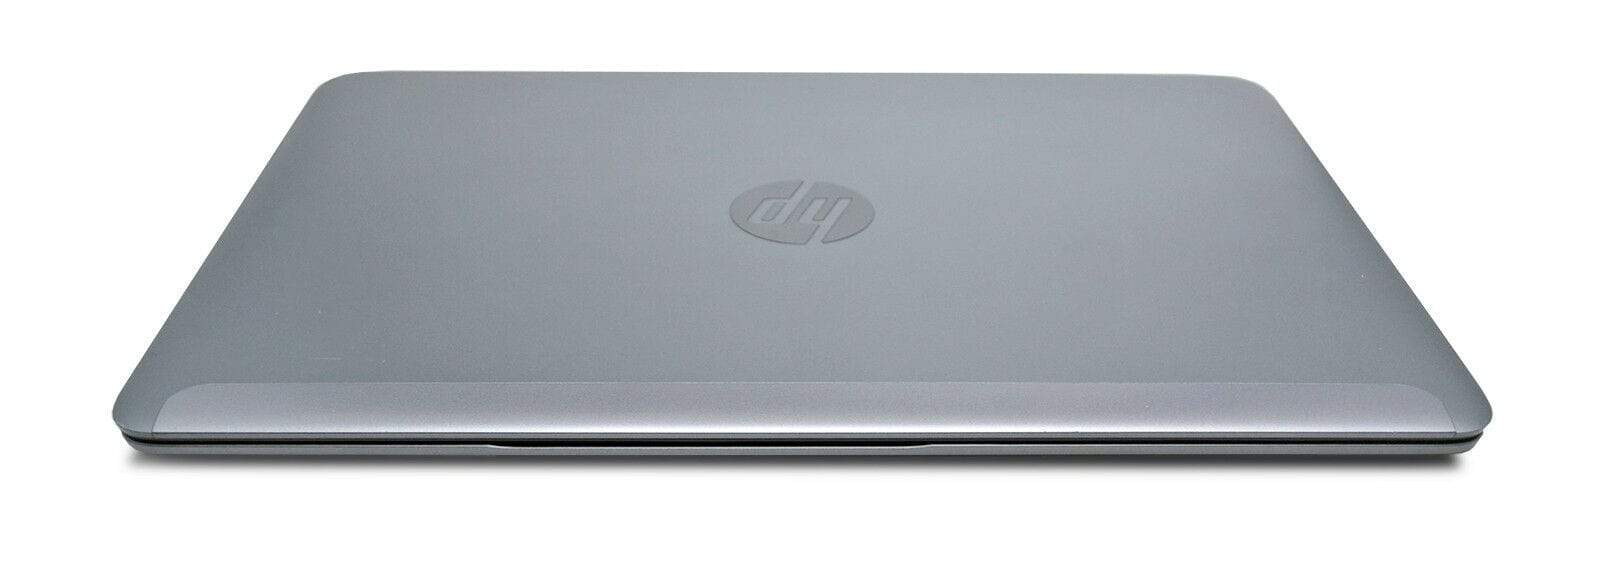 HP EliteBook 1040 G1 UltraBook: 240GB, 8GB RAM, 1.5kg, Core i5, VAT, Warranty - CruiseTech